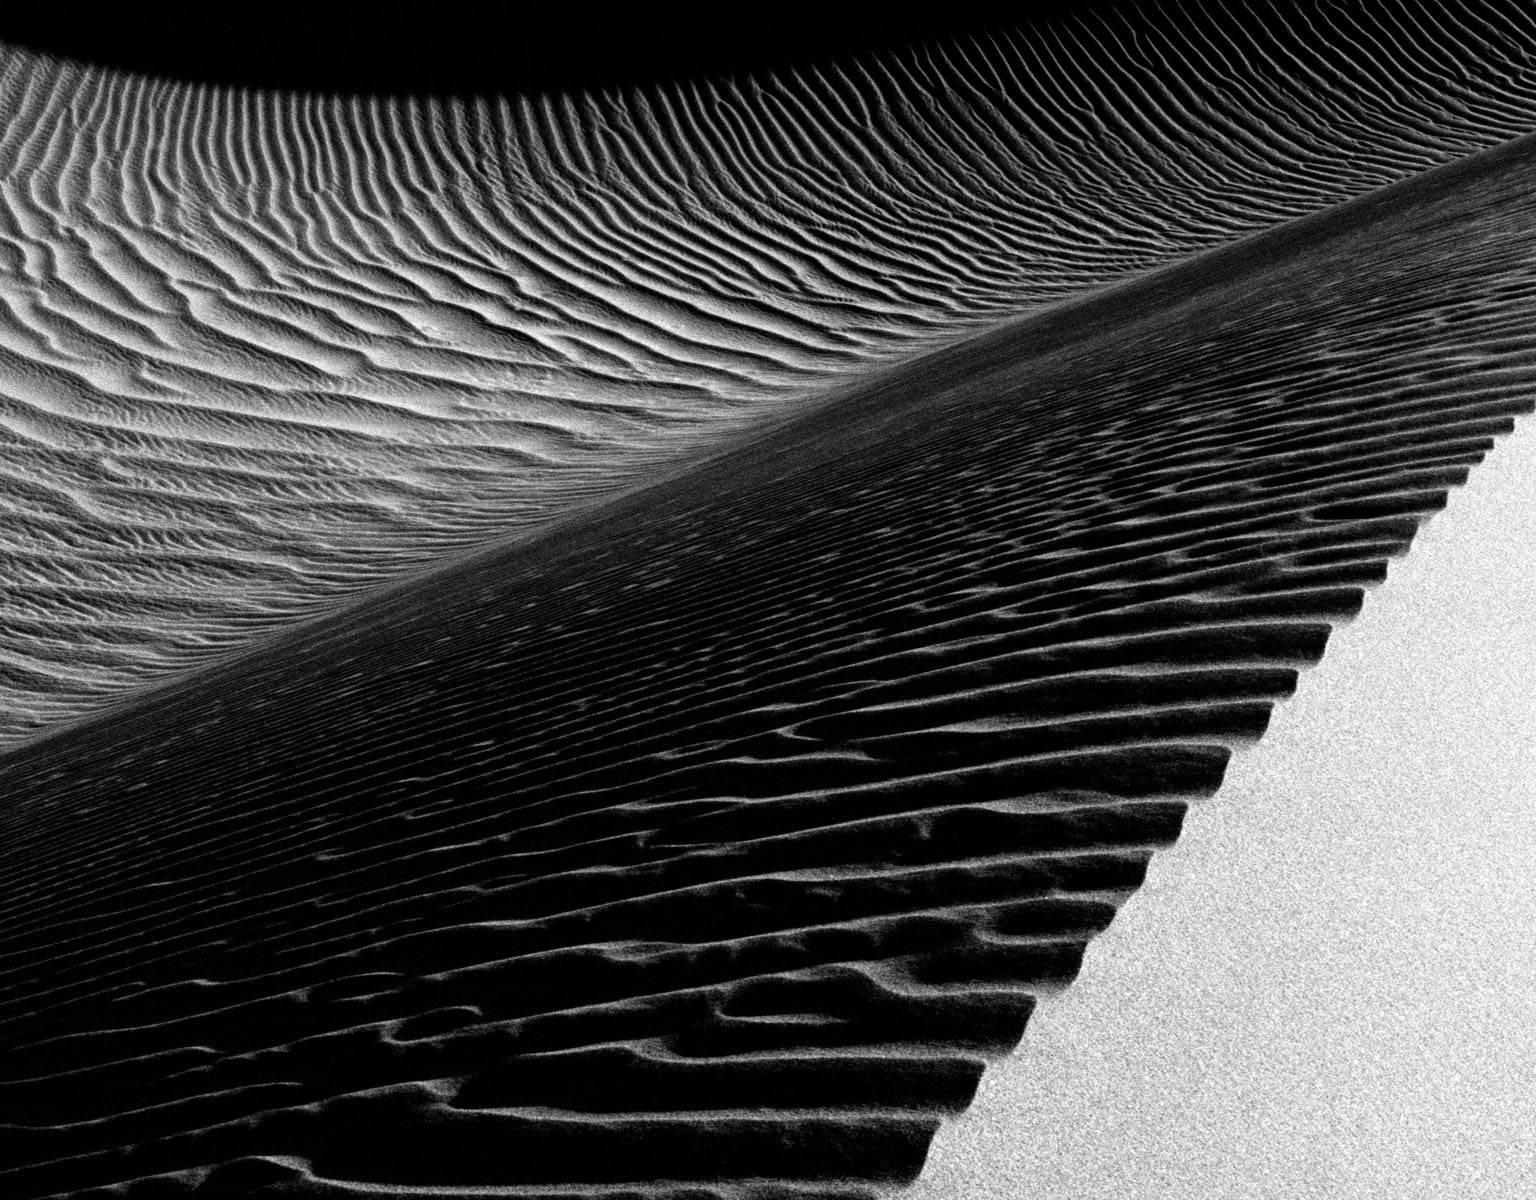 Sand Dunes Series #1 - Photograph by Keiji Iwai